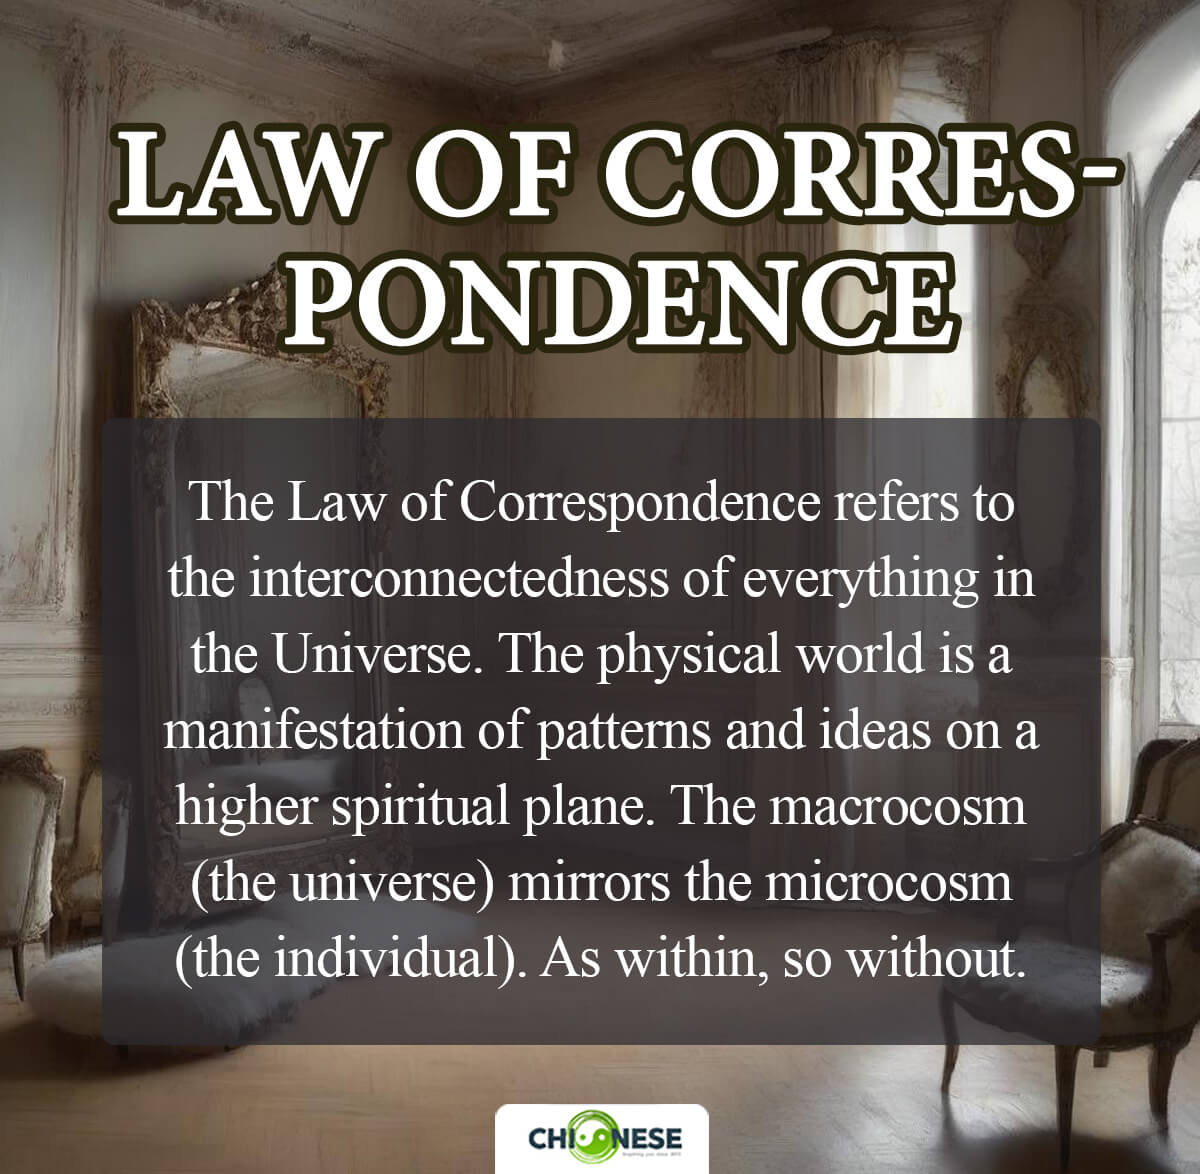 Law of Correspondence